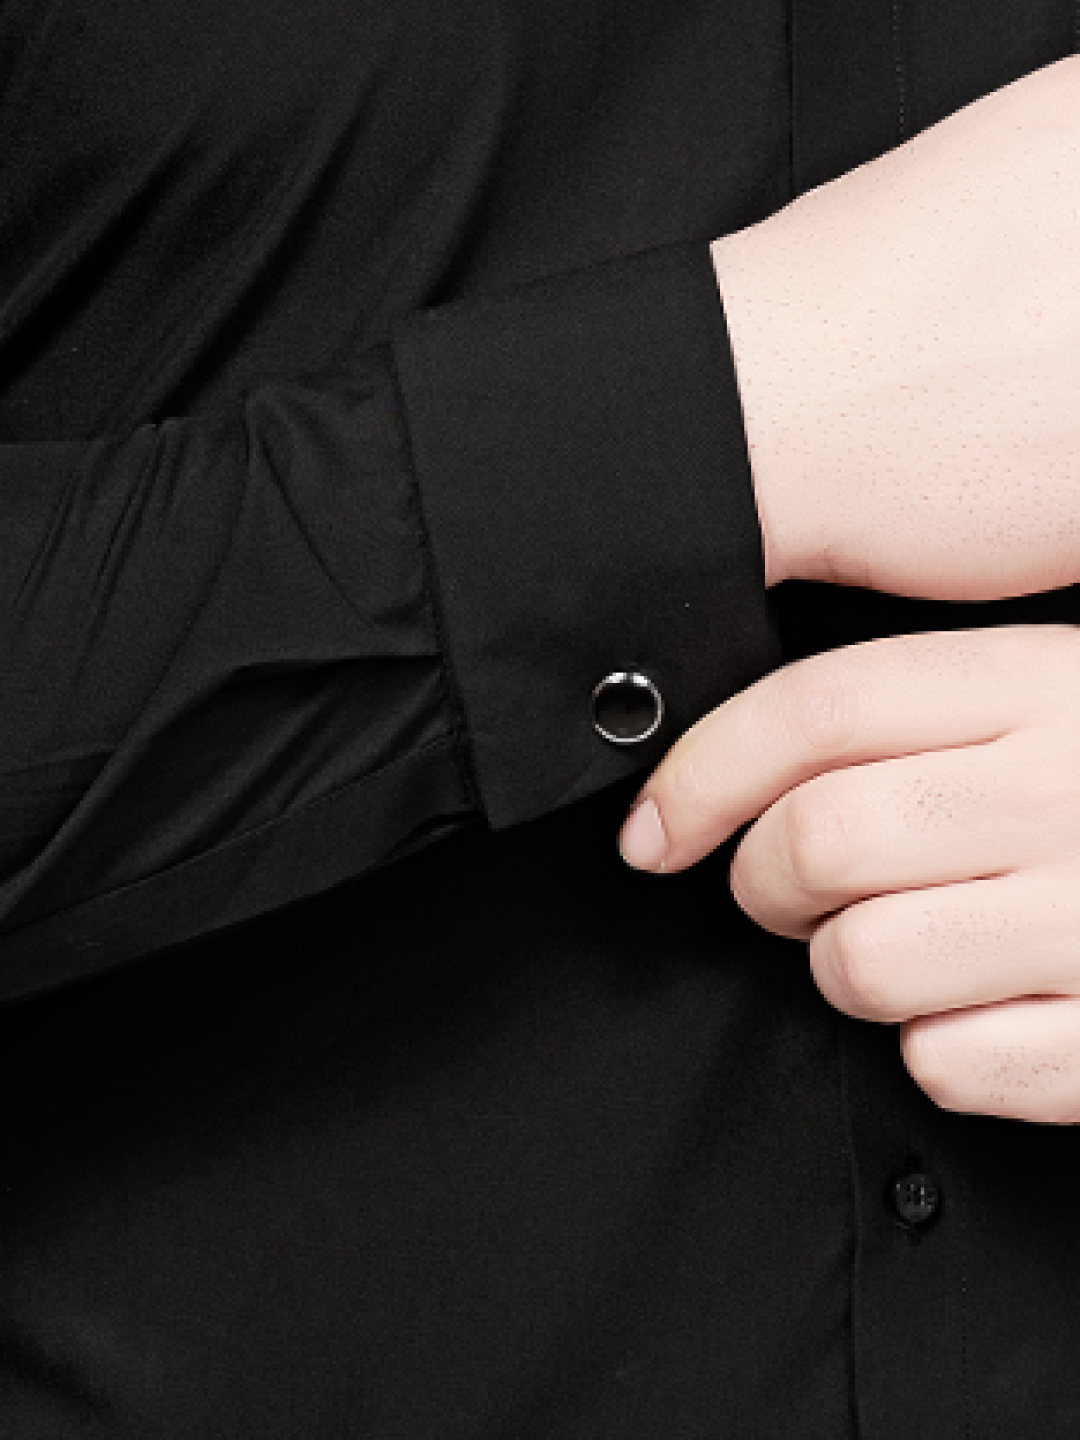 Black & White Men's Formal Cufflink Shirt Black